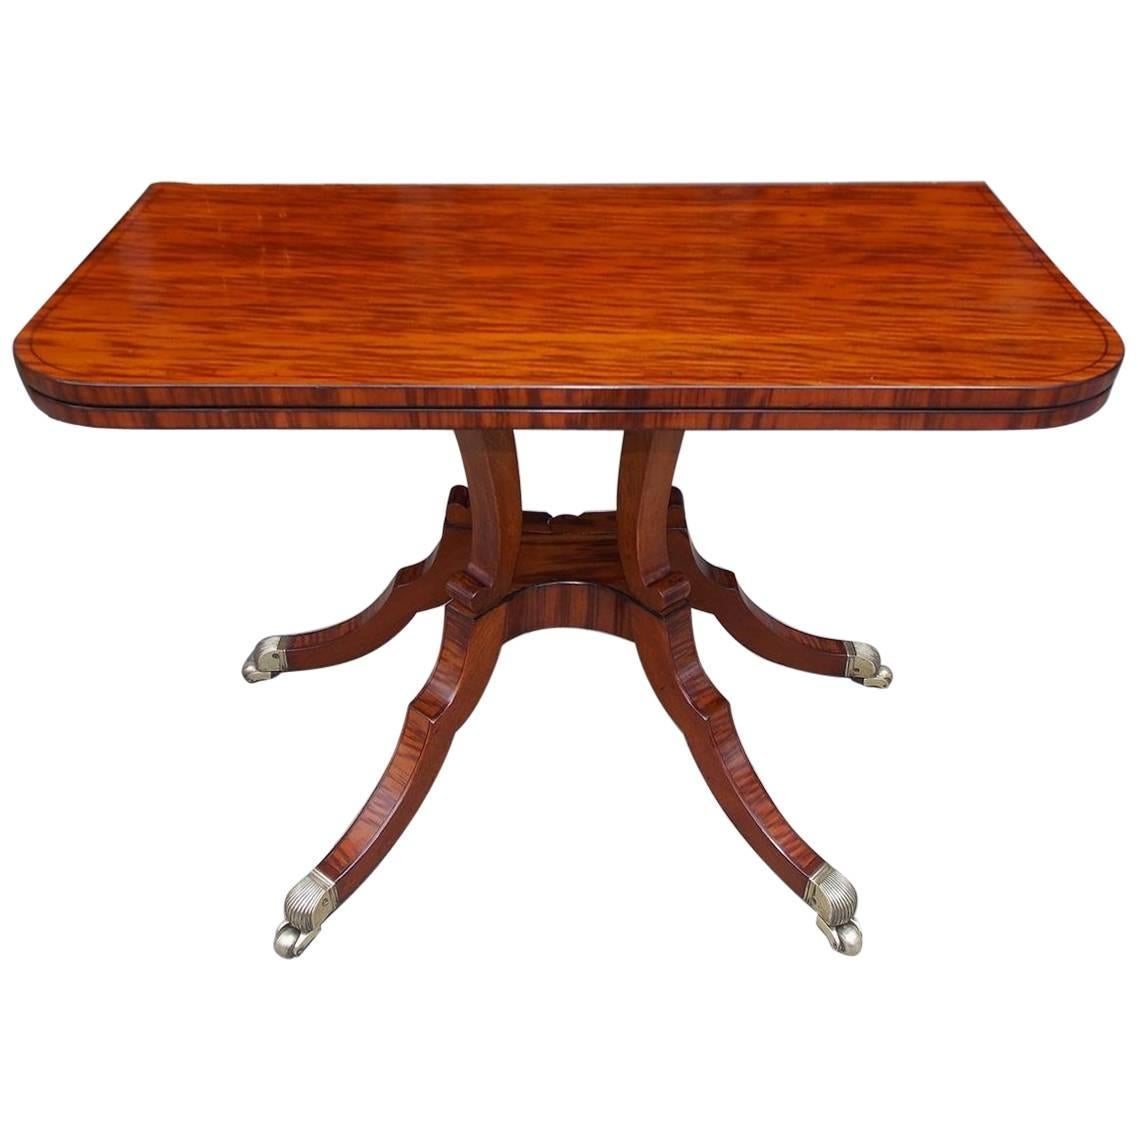 English Regency Figured Kingswood and Ebony Inlaid Hinged Game Table, C. 1810